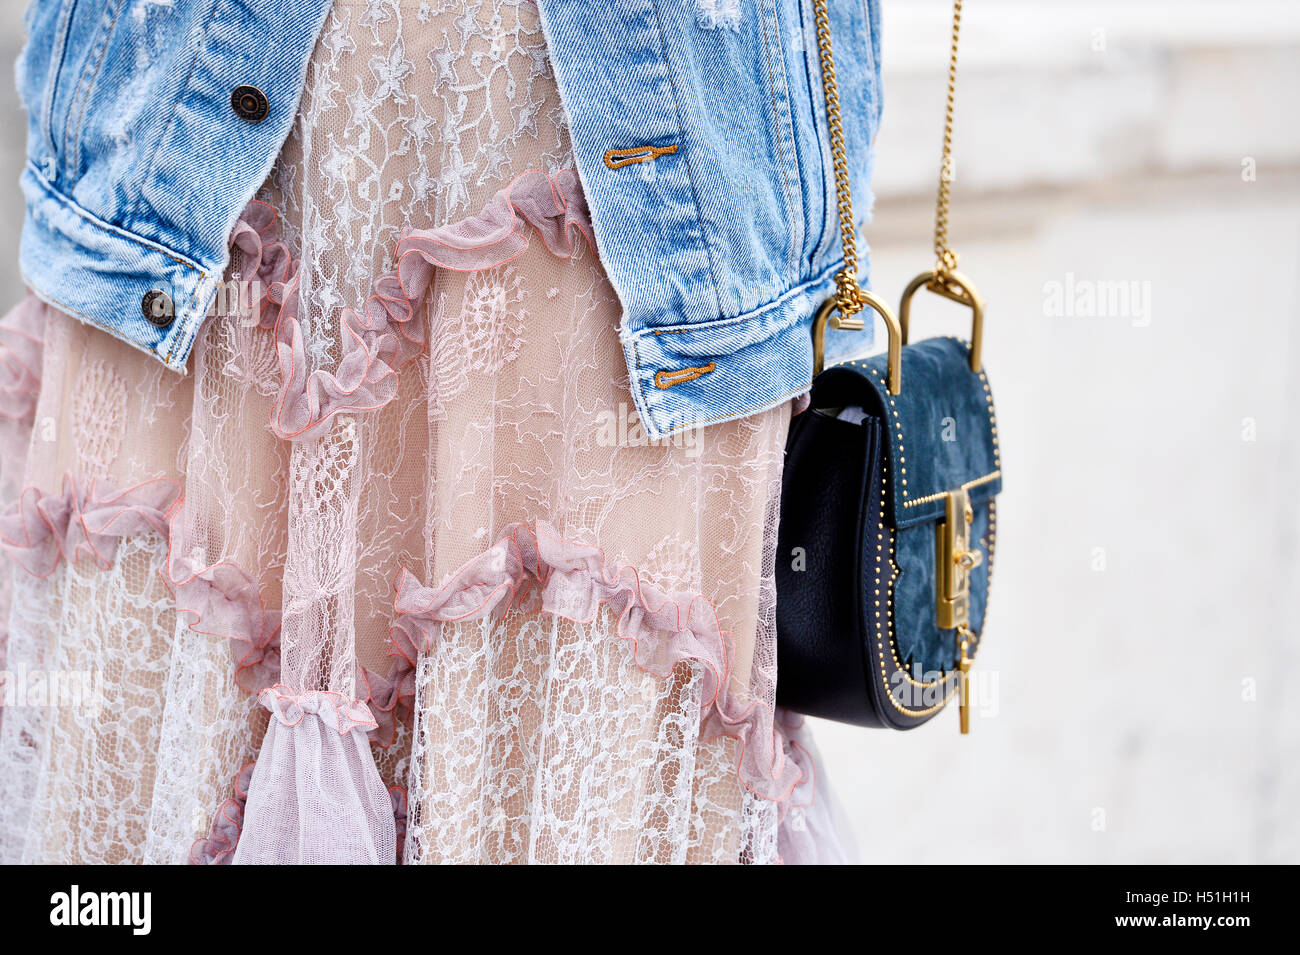 tekort Misverstand wetenschapper Lace dress at Paris Fashion Week 2016 Stock Photo - Alamy